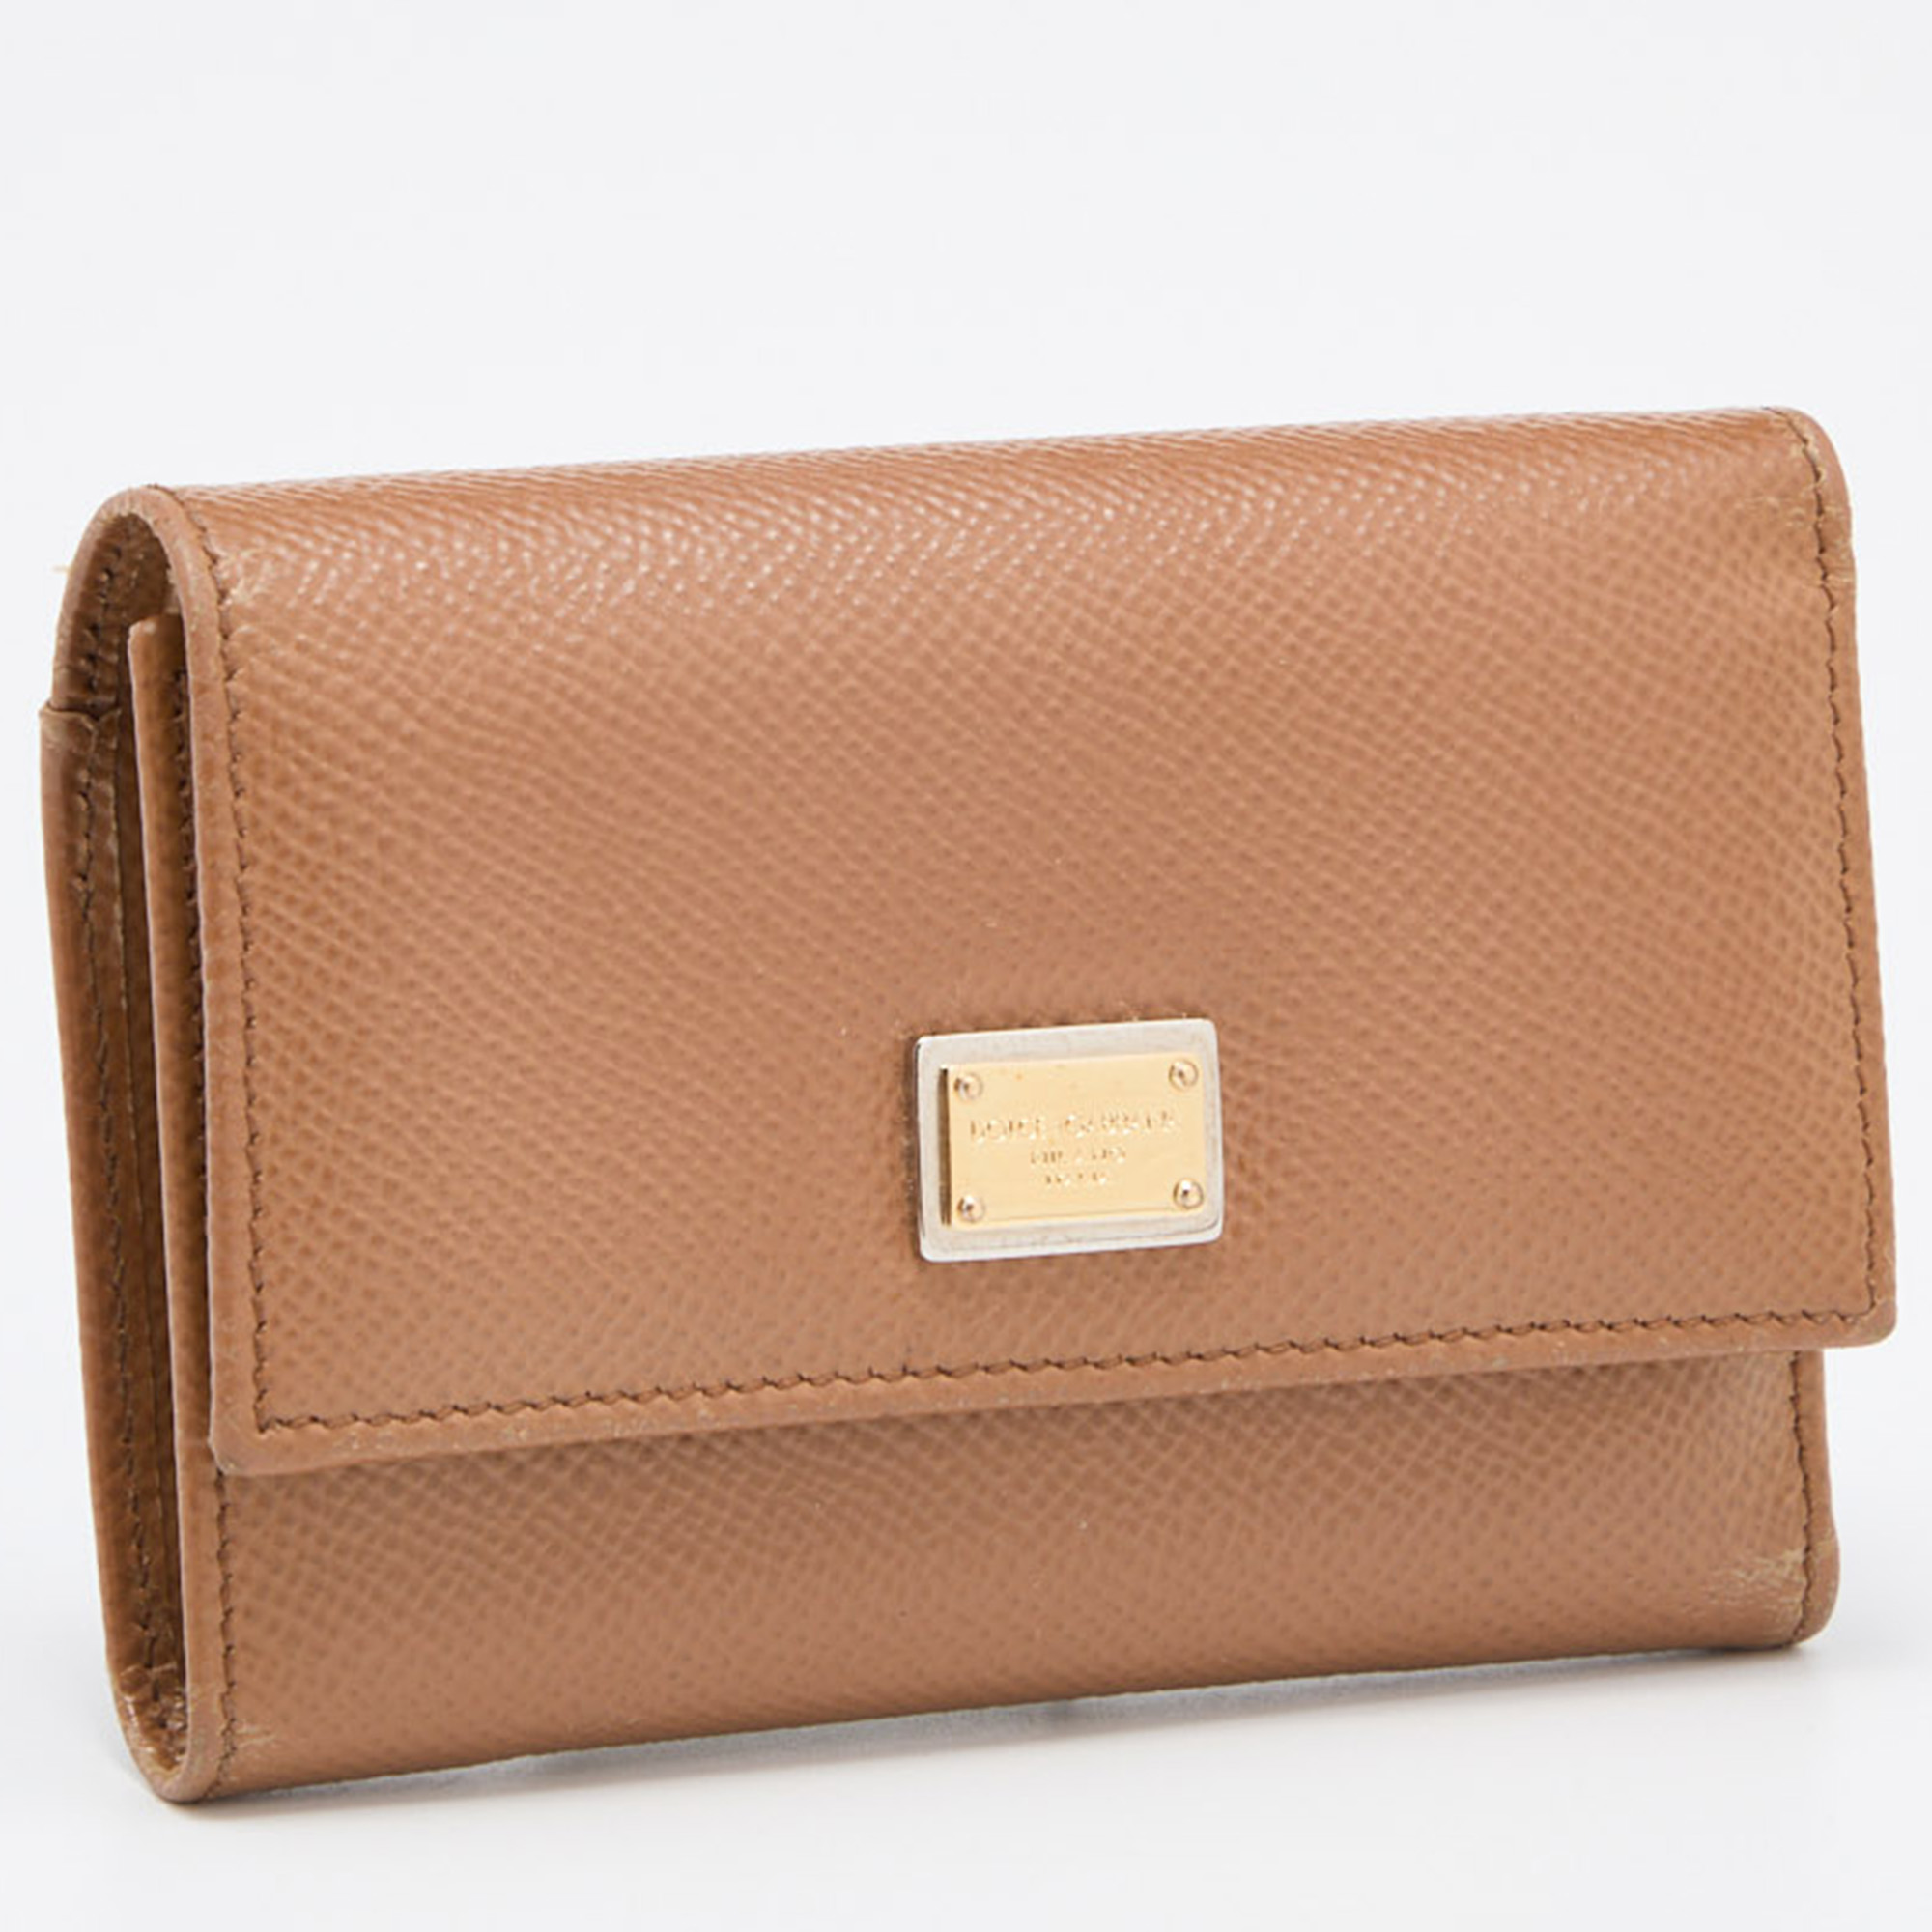 Dolce & Gabbana Beige Leather Trifold Wallet